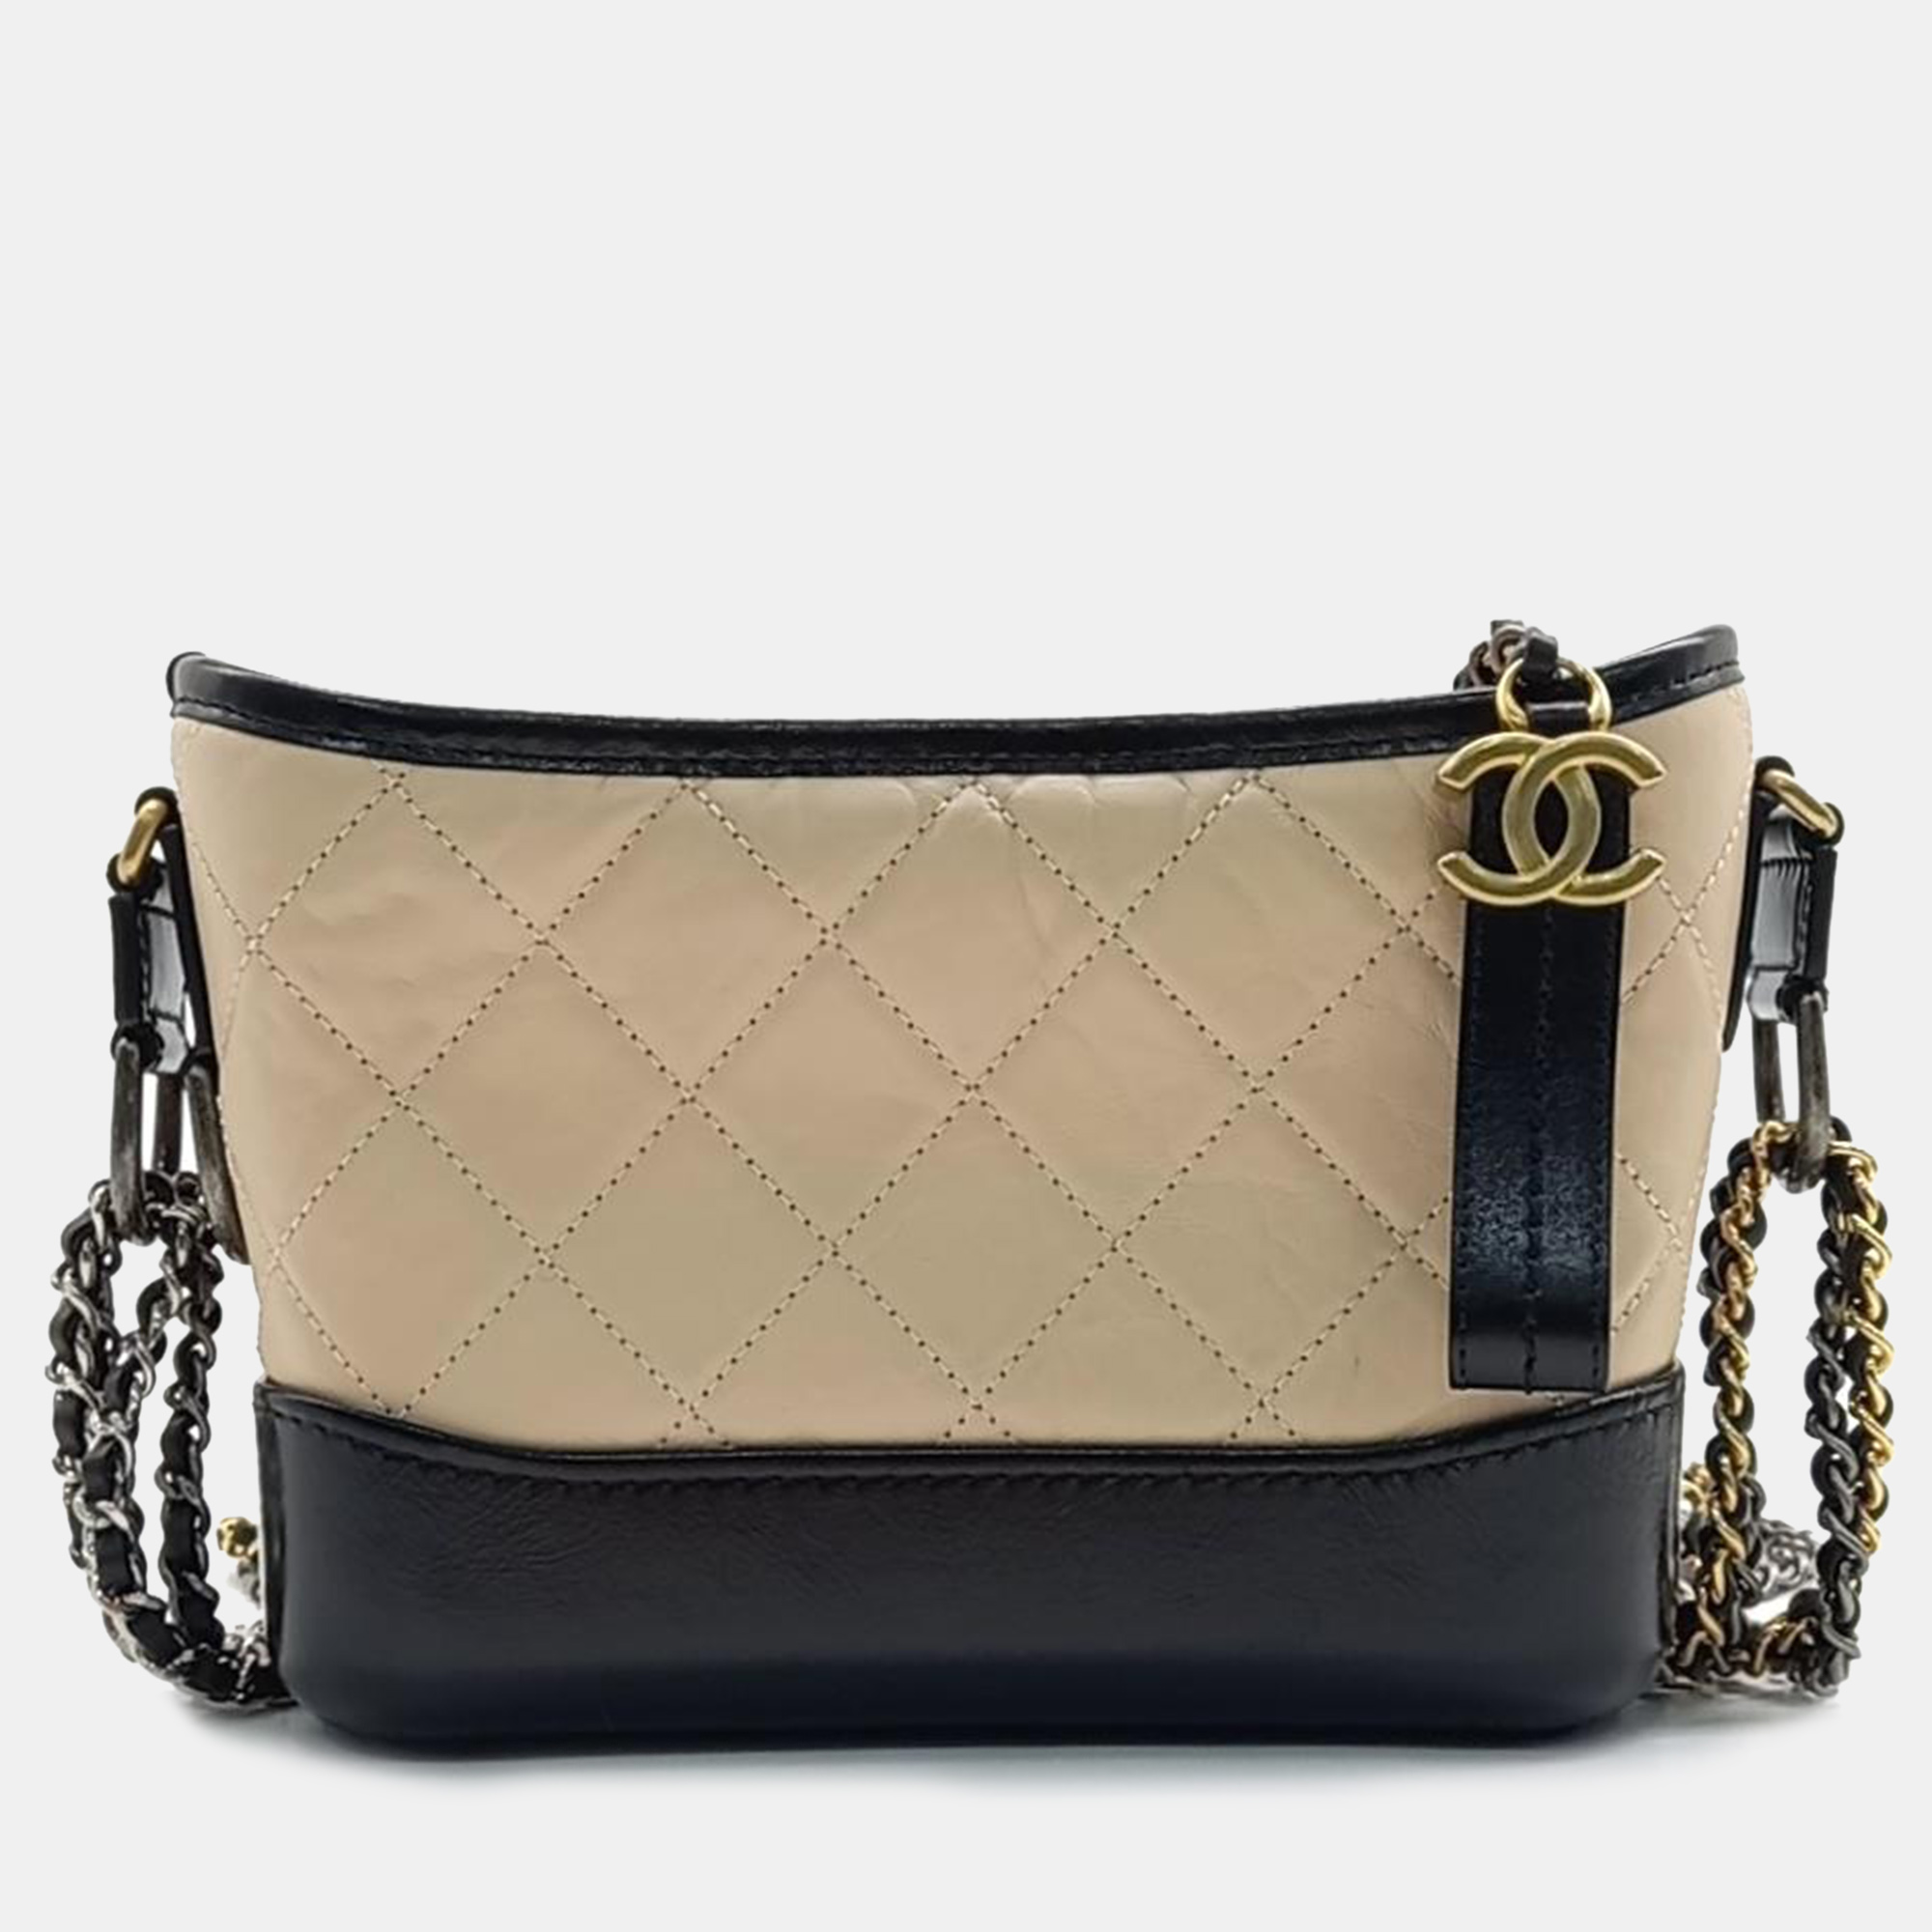 

Chanel Gabrielle Hobo Bag Small, Beige